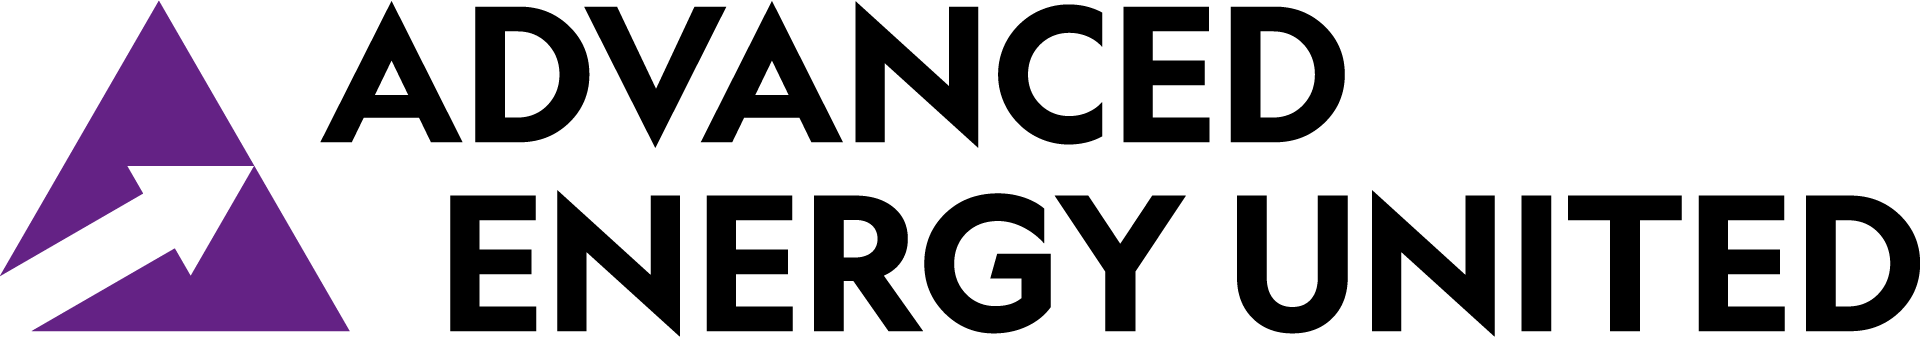 Advanced_Energy_United_logo_(RGB_for_web)_(1).png